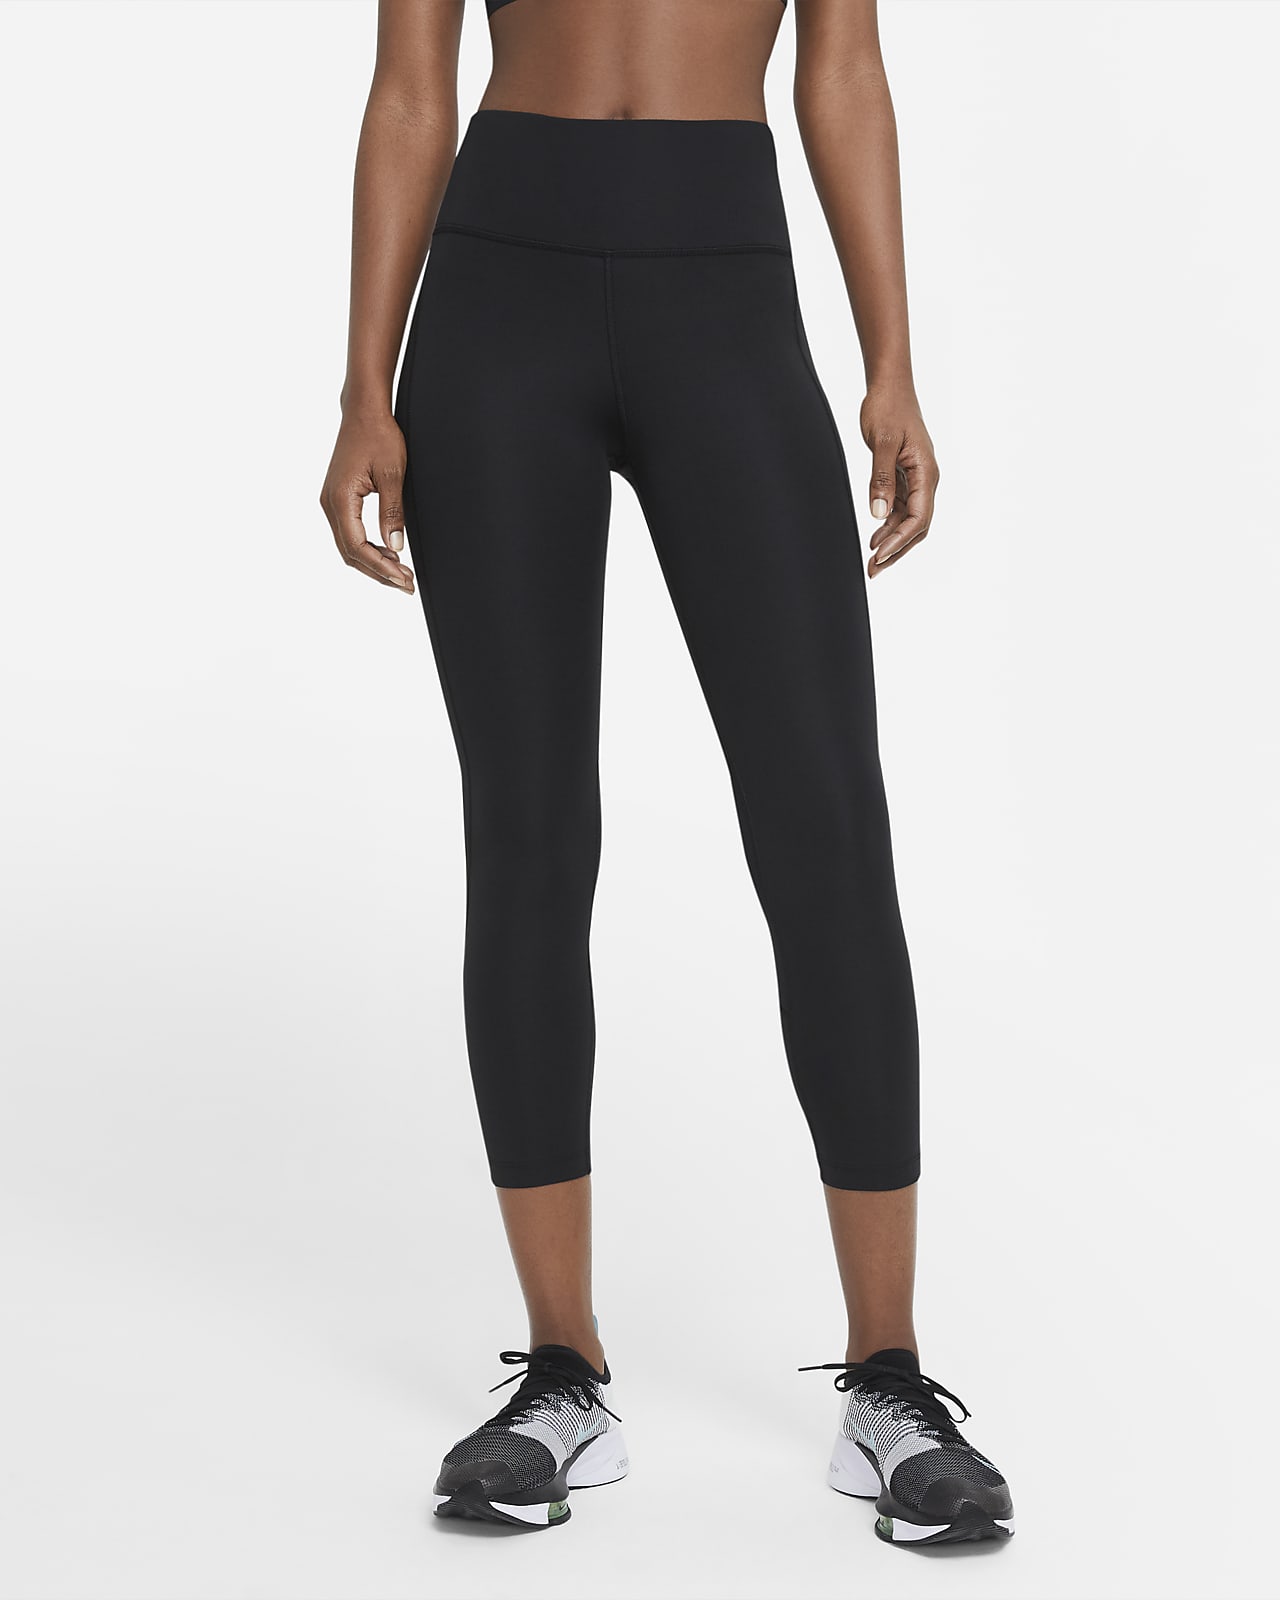 Nike Fast középmagas derekú, rövidített női futóleggings